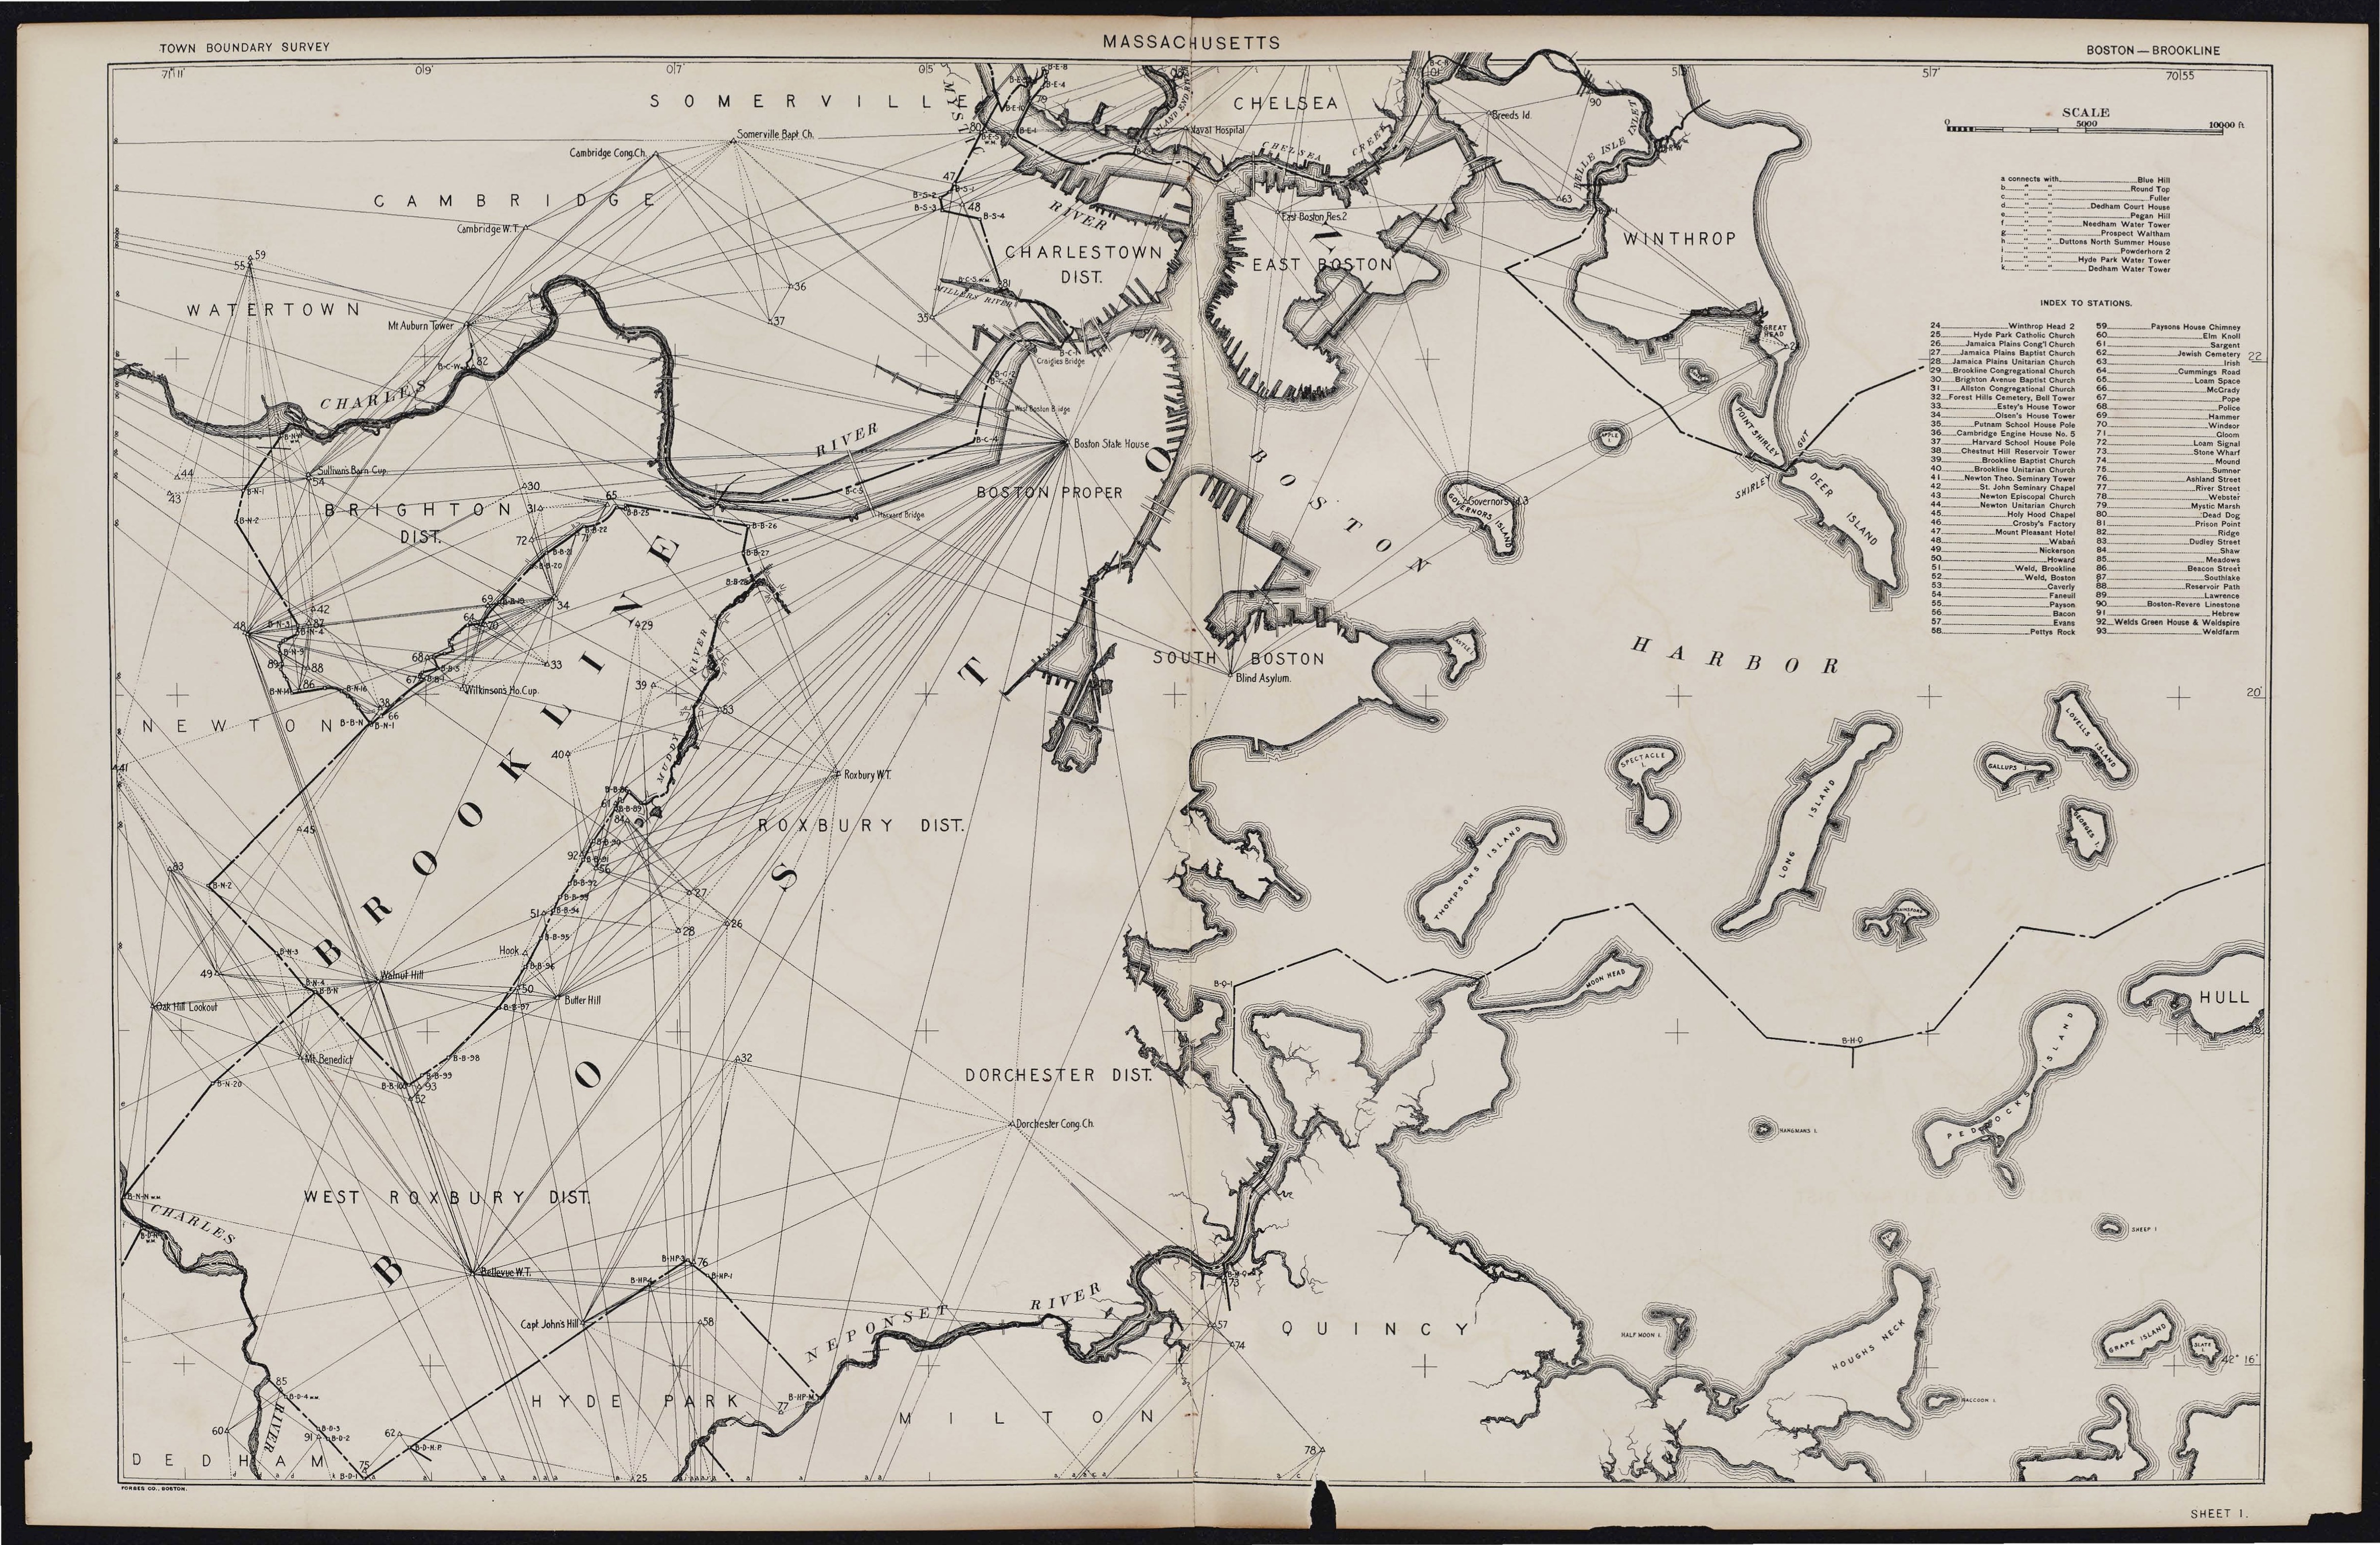 Trigonometric survey lines for Boston from the boundaries atlas